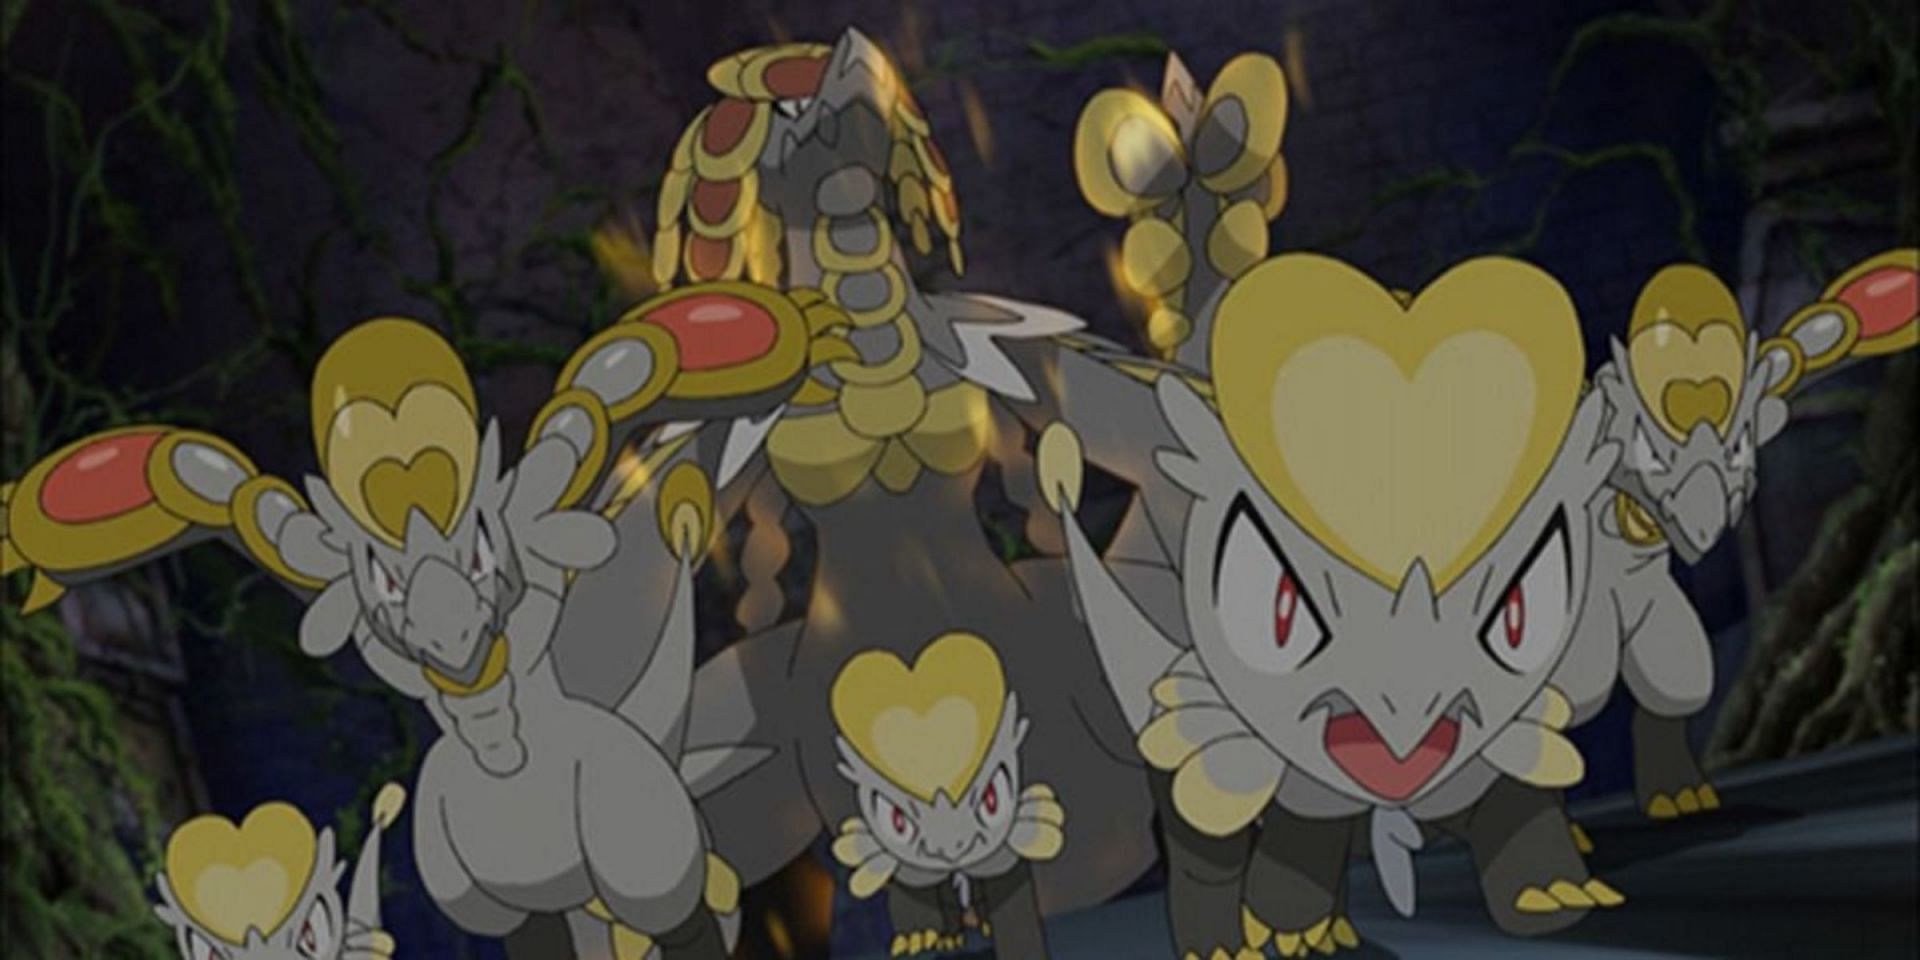 Jangmo-o, Hakamo-o, and Kommo-o in the Pokemon anime series (Image via The Pokemon Company)